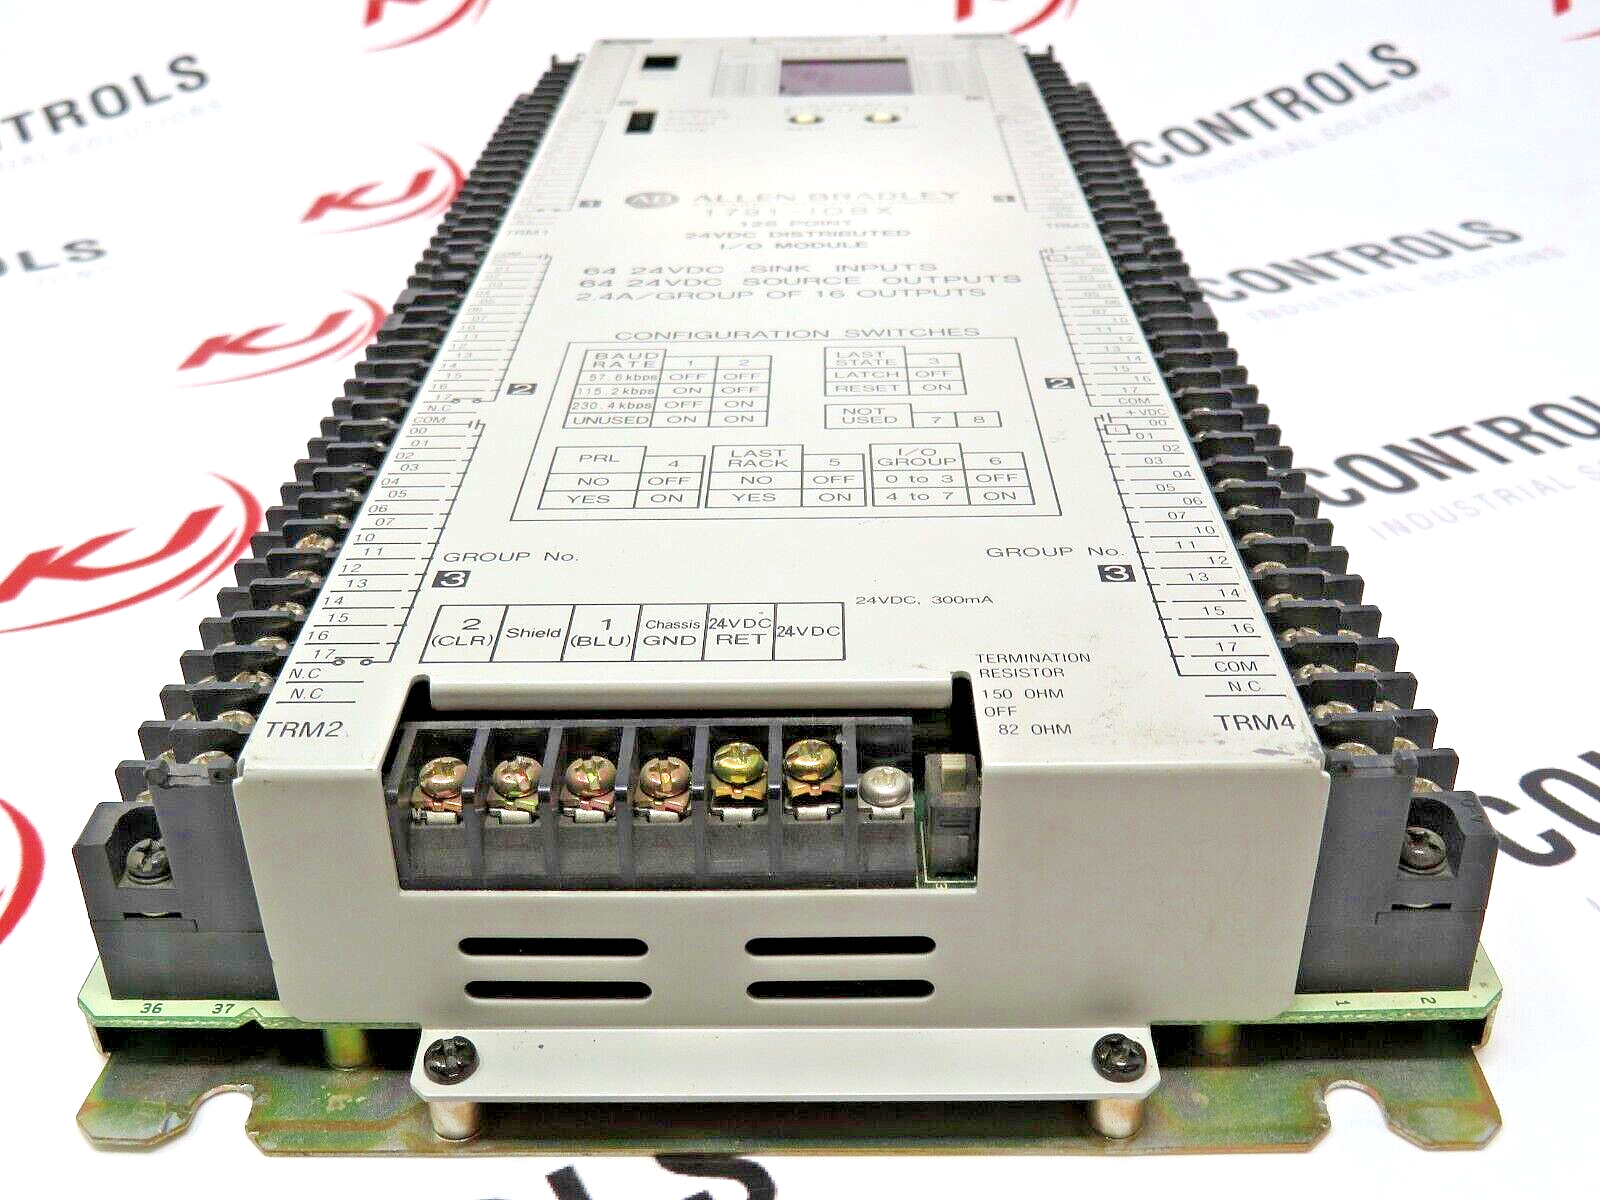 Allen Bradley 1791-IOBX 128-Point 24VDC Distributed I/O Module